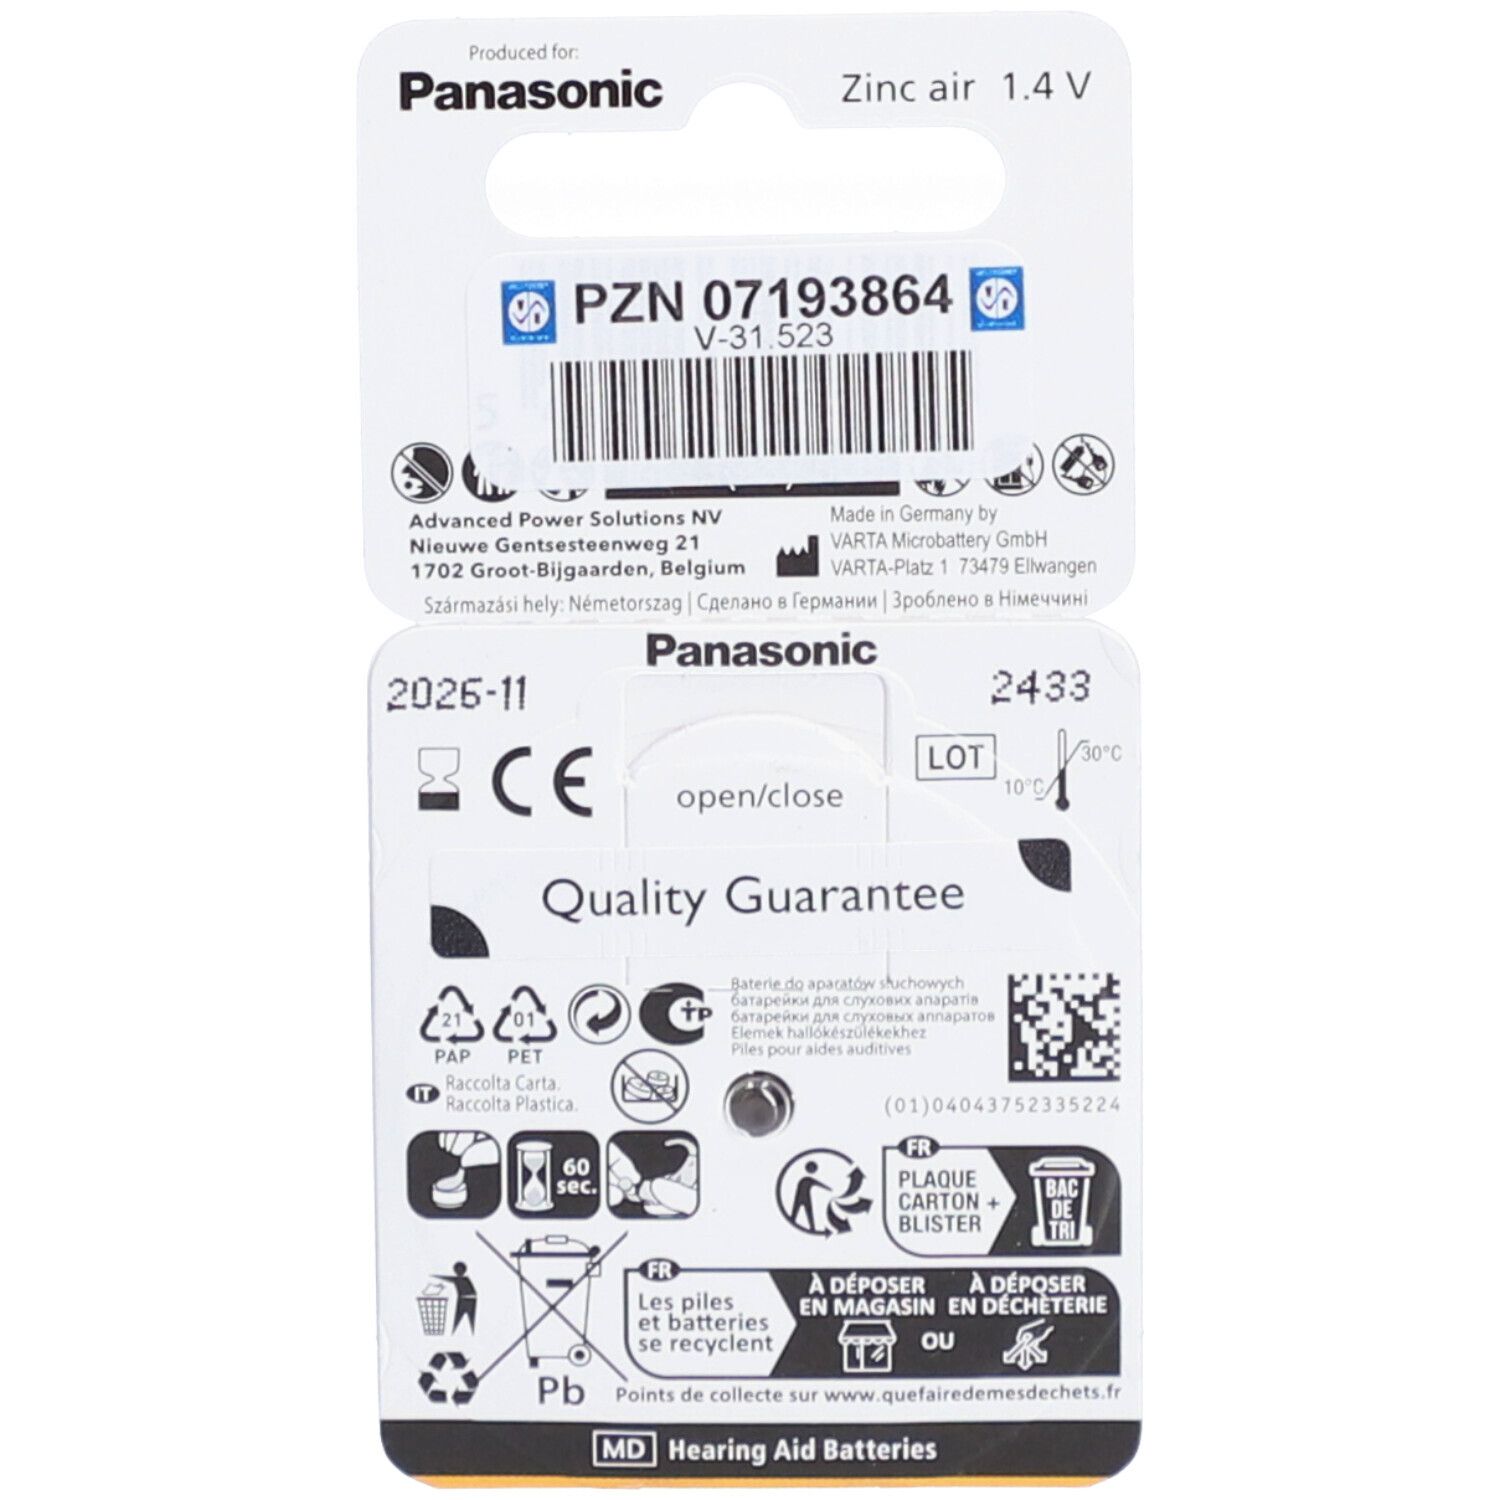 Panasonic® PR13 Batterien für Hörgeräte